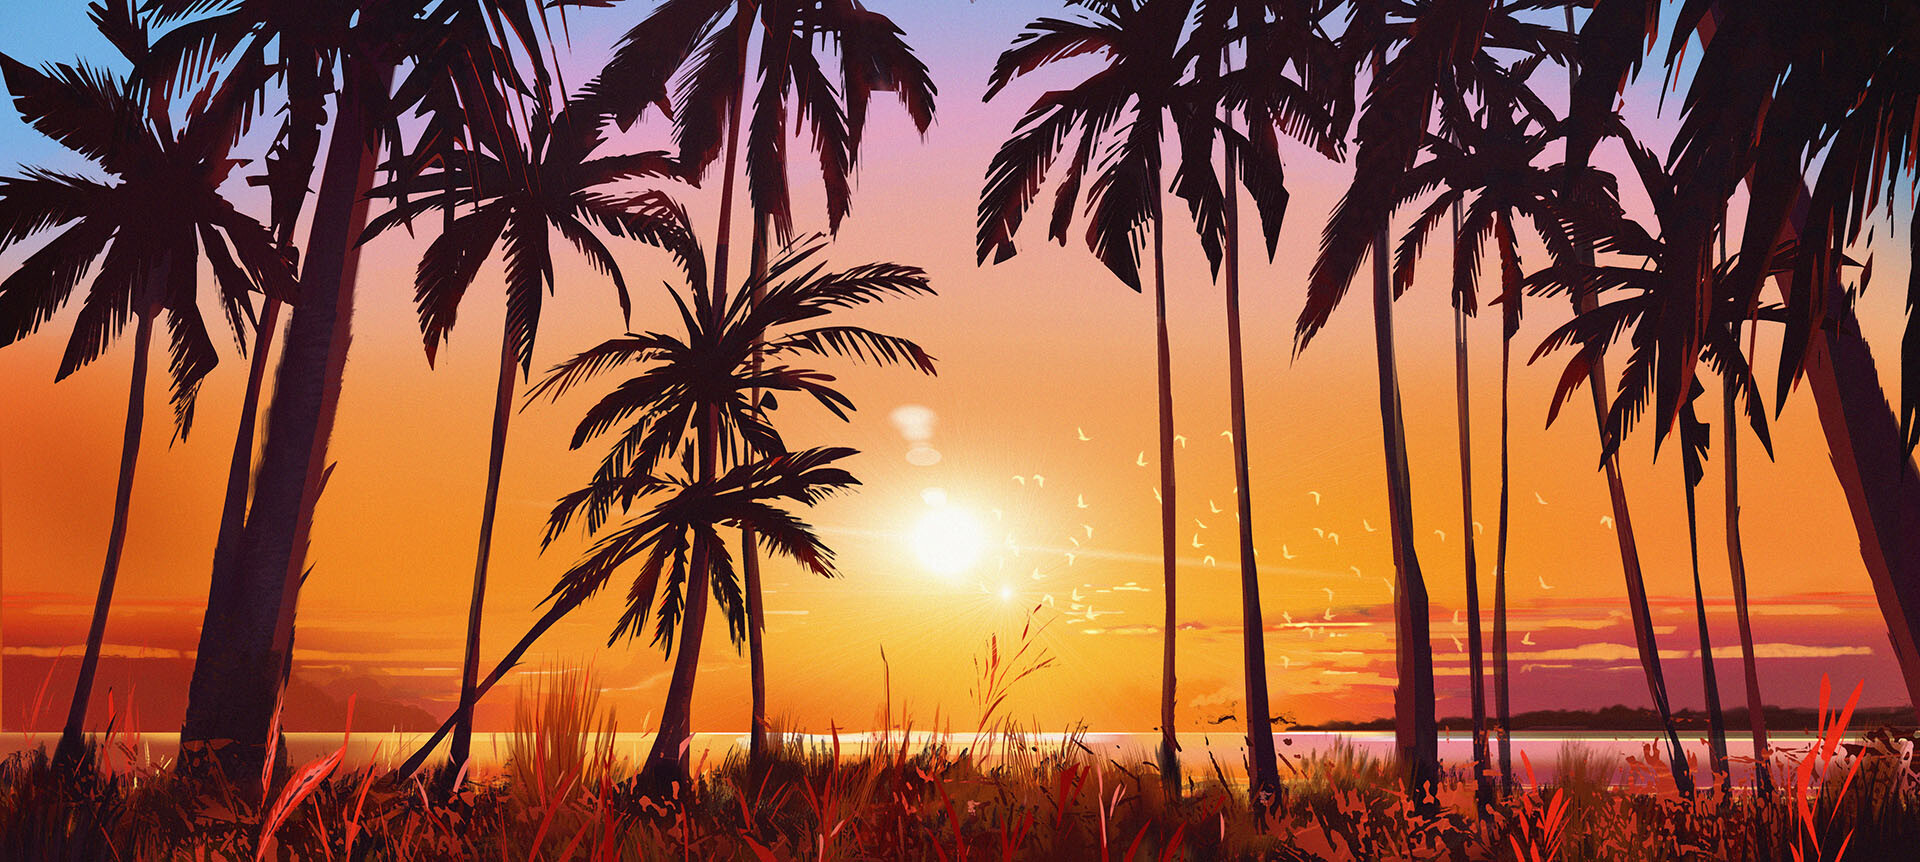 ArtStation Digital Art Sunset 2D Palm Trees Concept Art Judith De Repentigny 1920x862